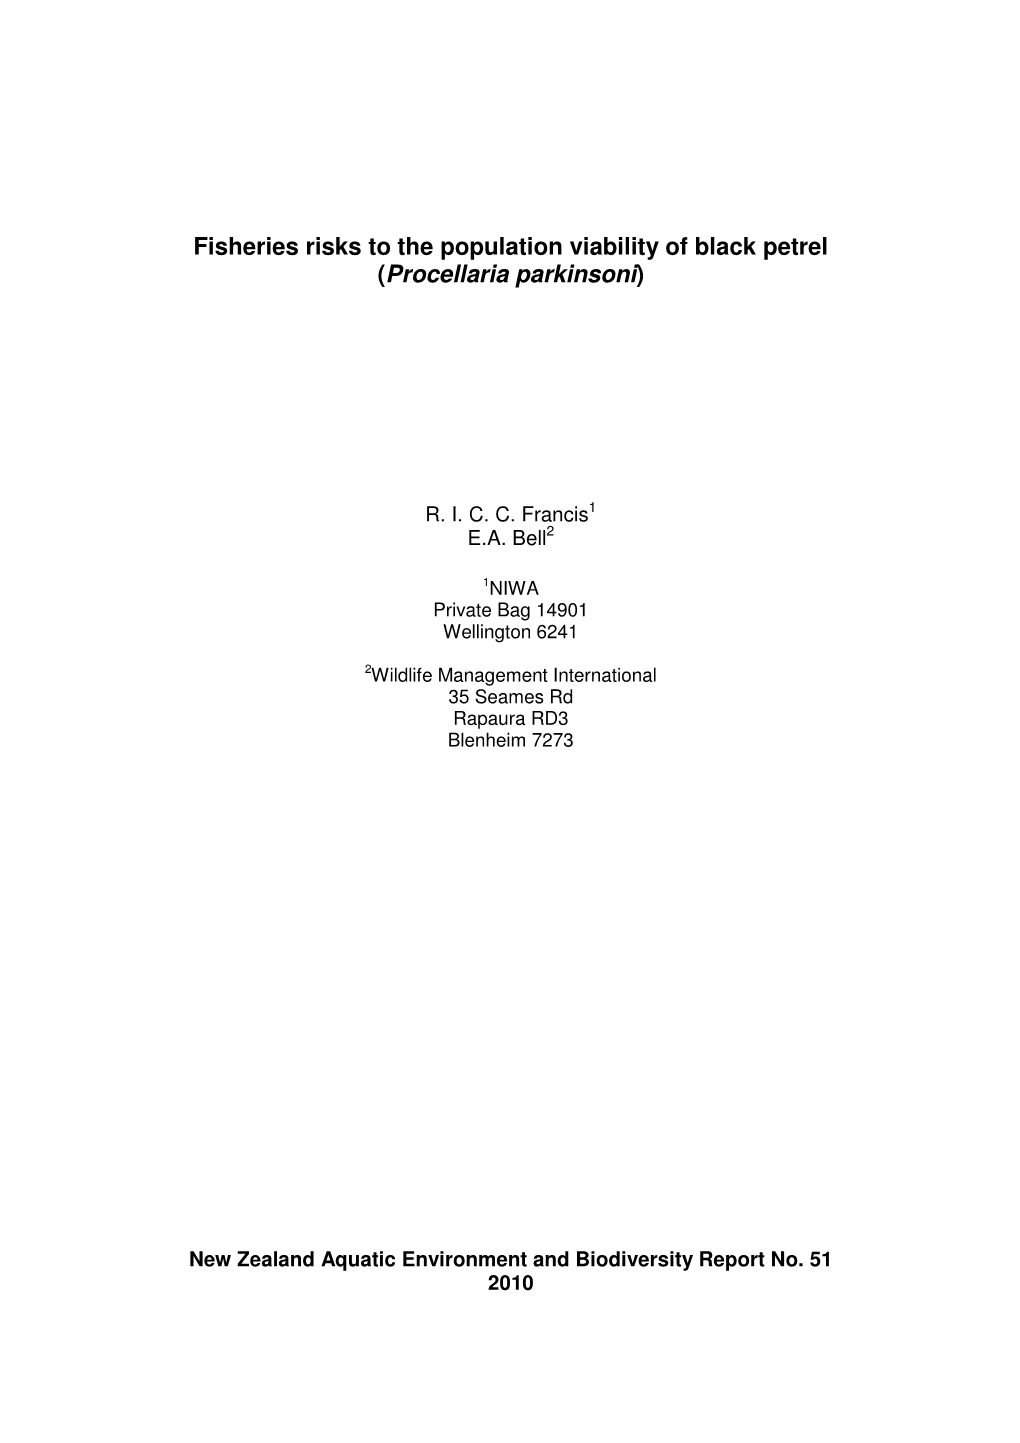 Fisheries Risks to the Population Viability of Black Petrel (Procellaria Parkinsoni)